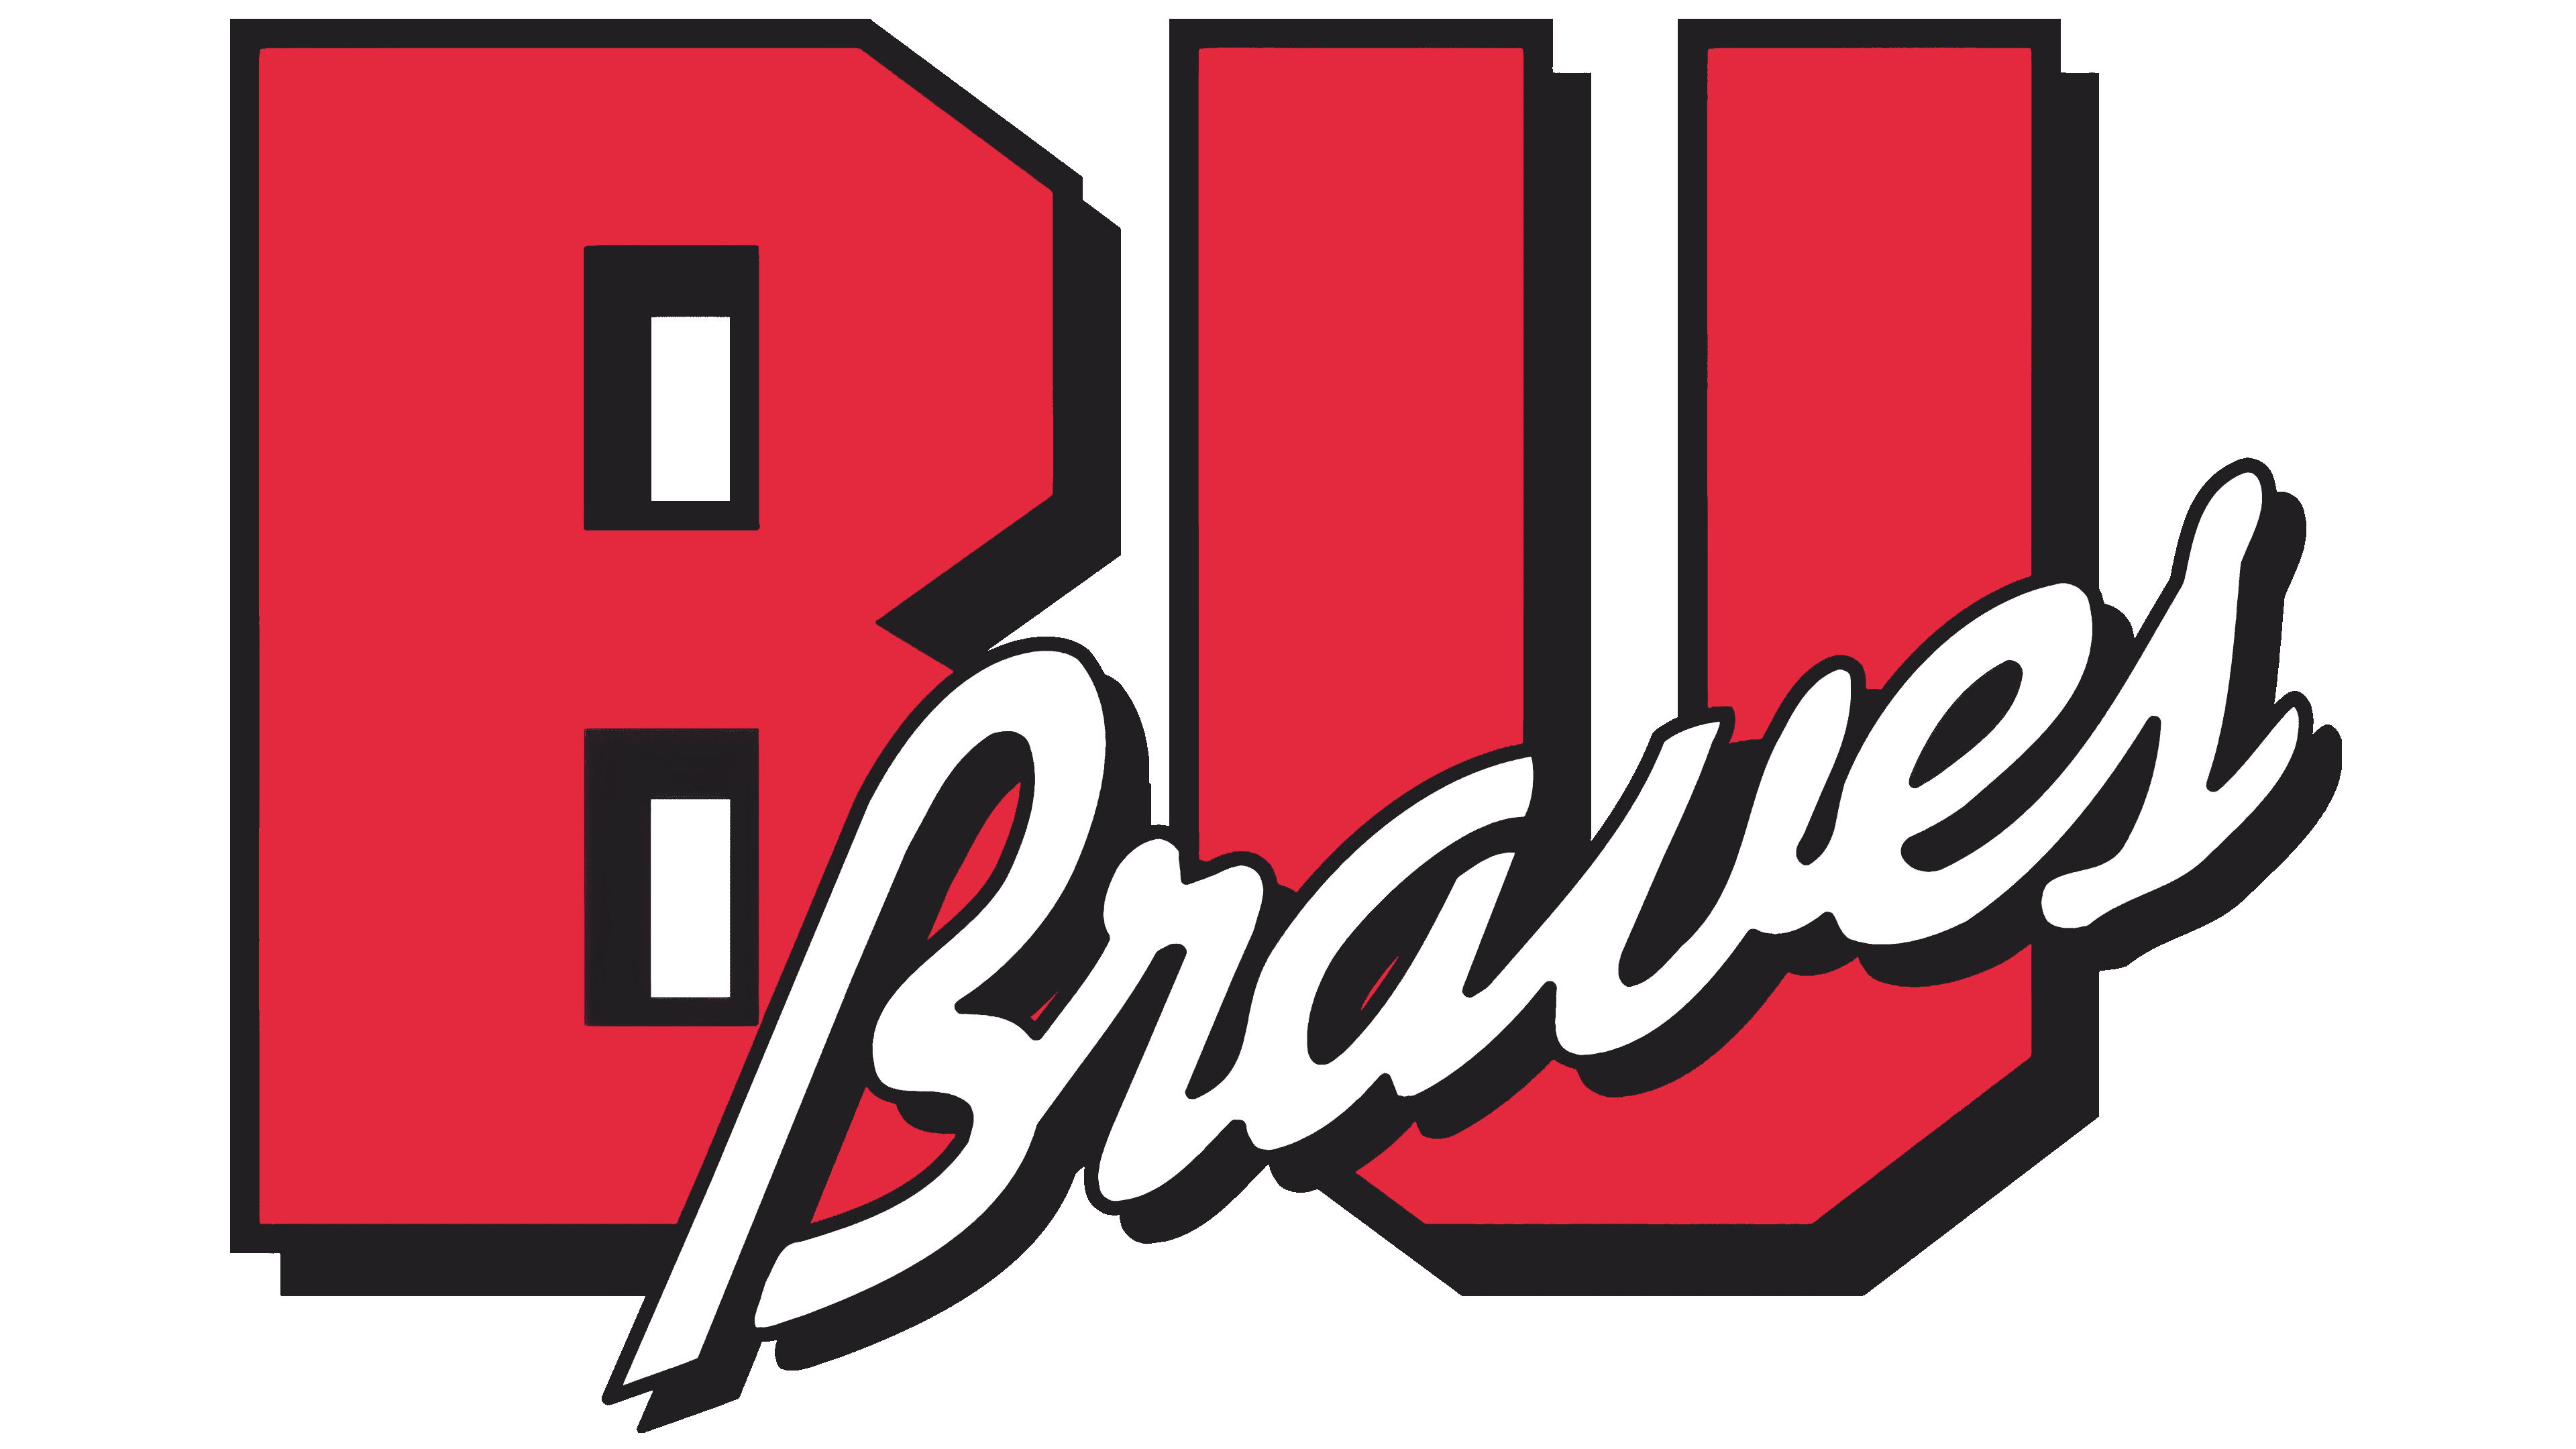 Bradley Braves Logo, symbol, meaning, history, PNG, brand